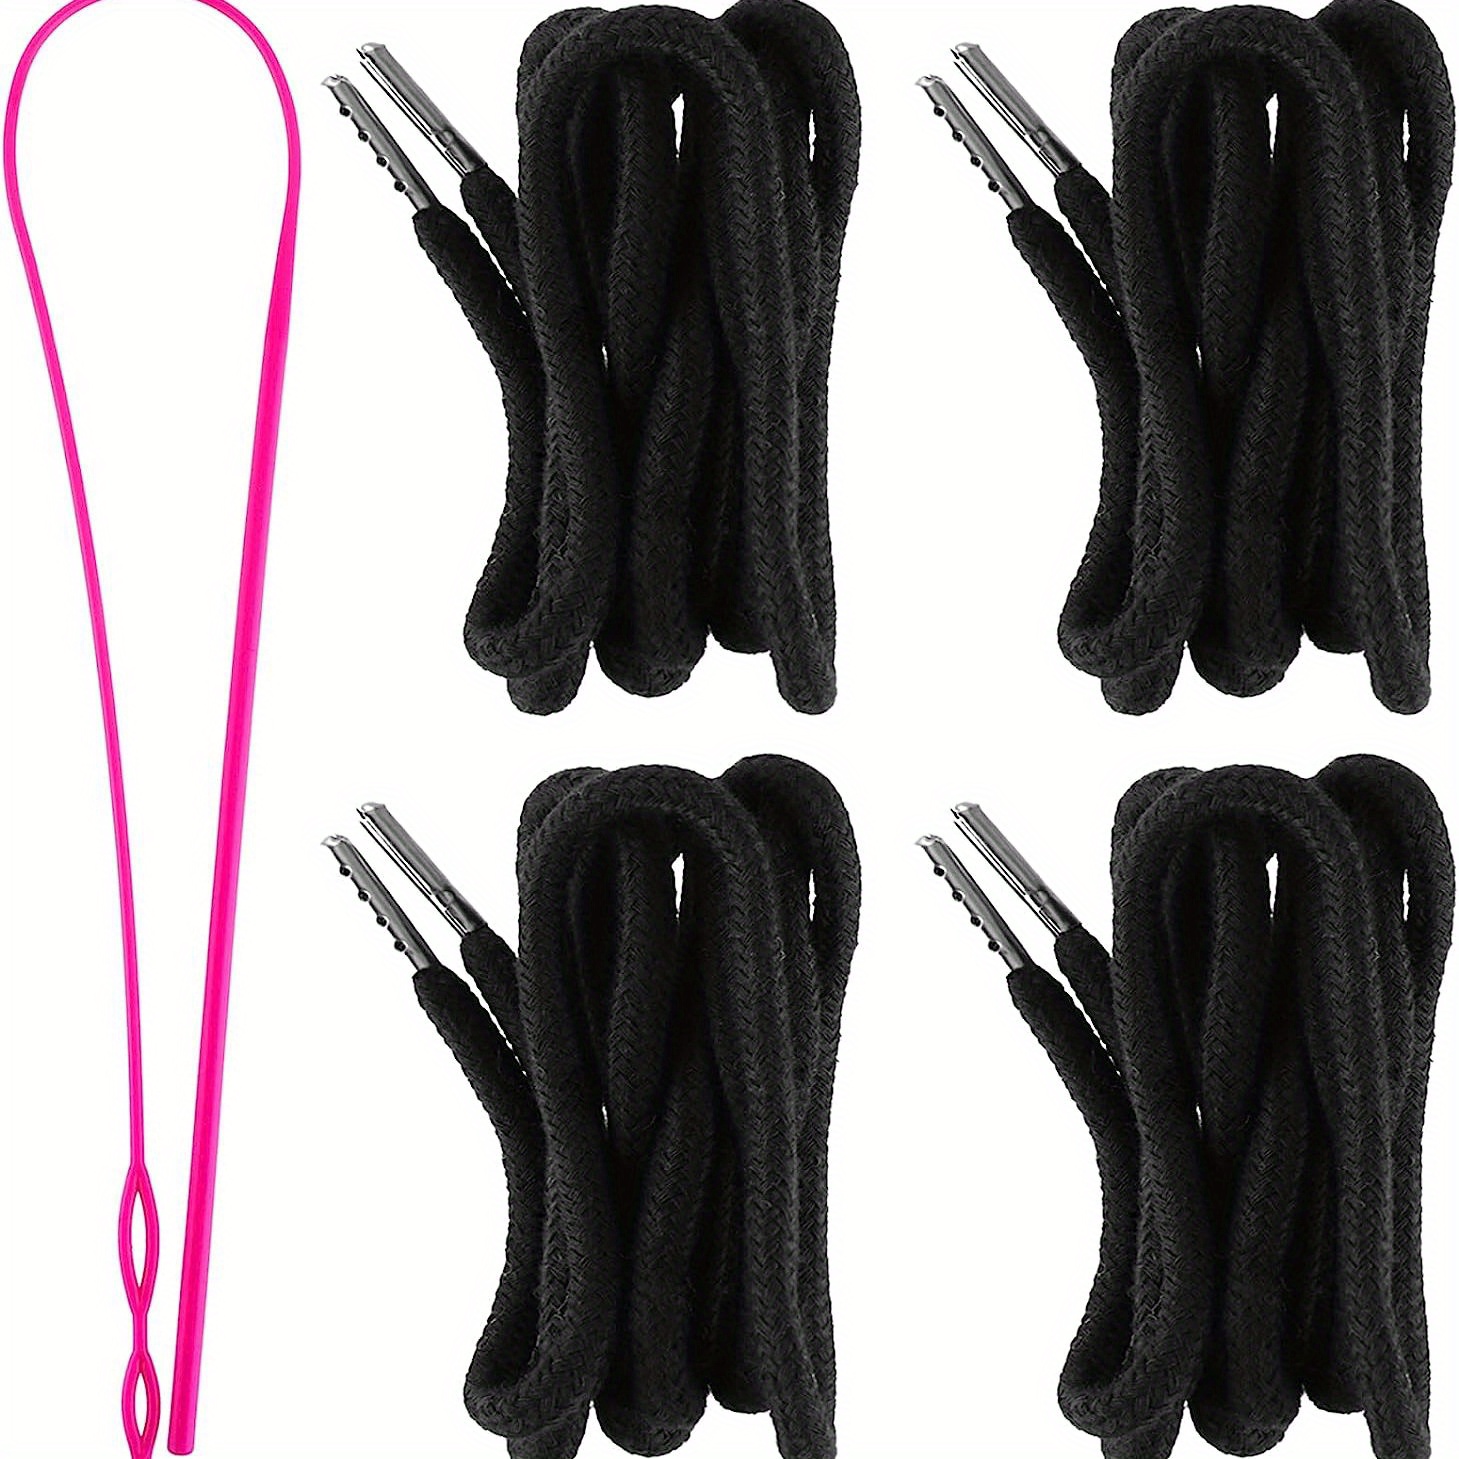 4pcs Drawstring Replacement Hoodie String Cord Shorts Drawstrings